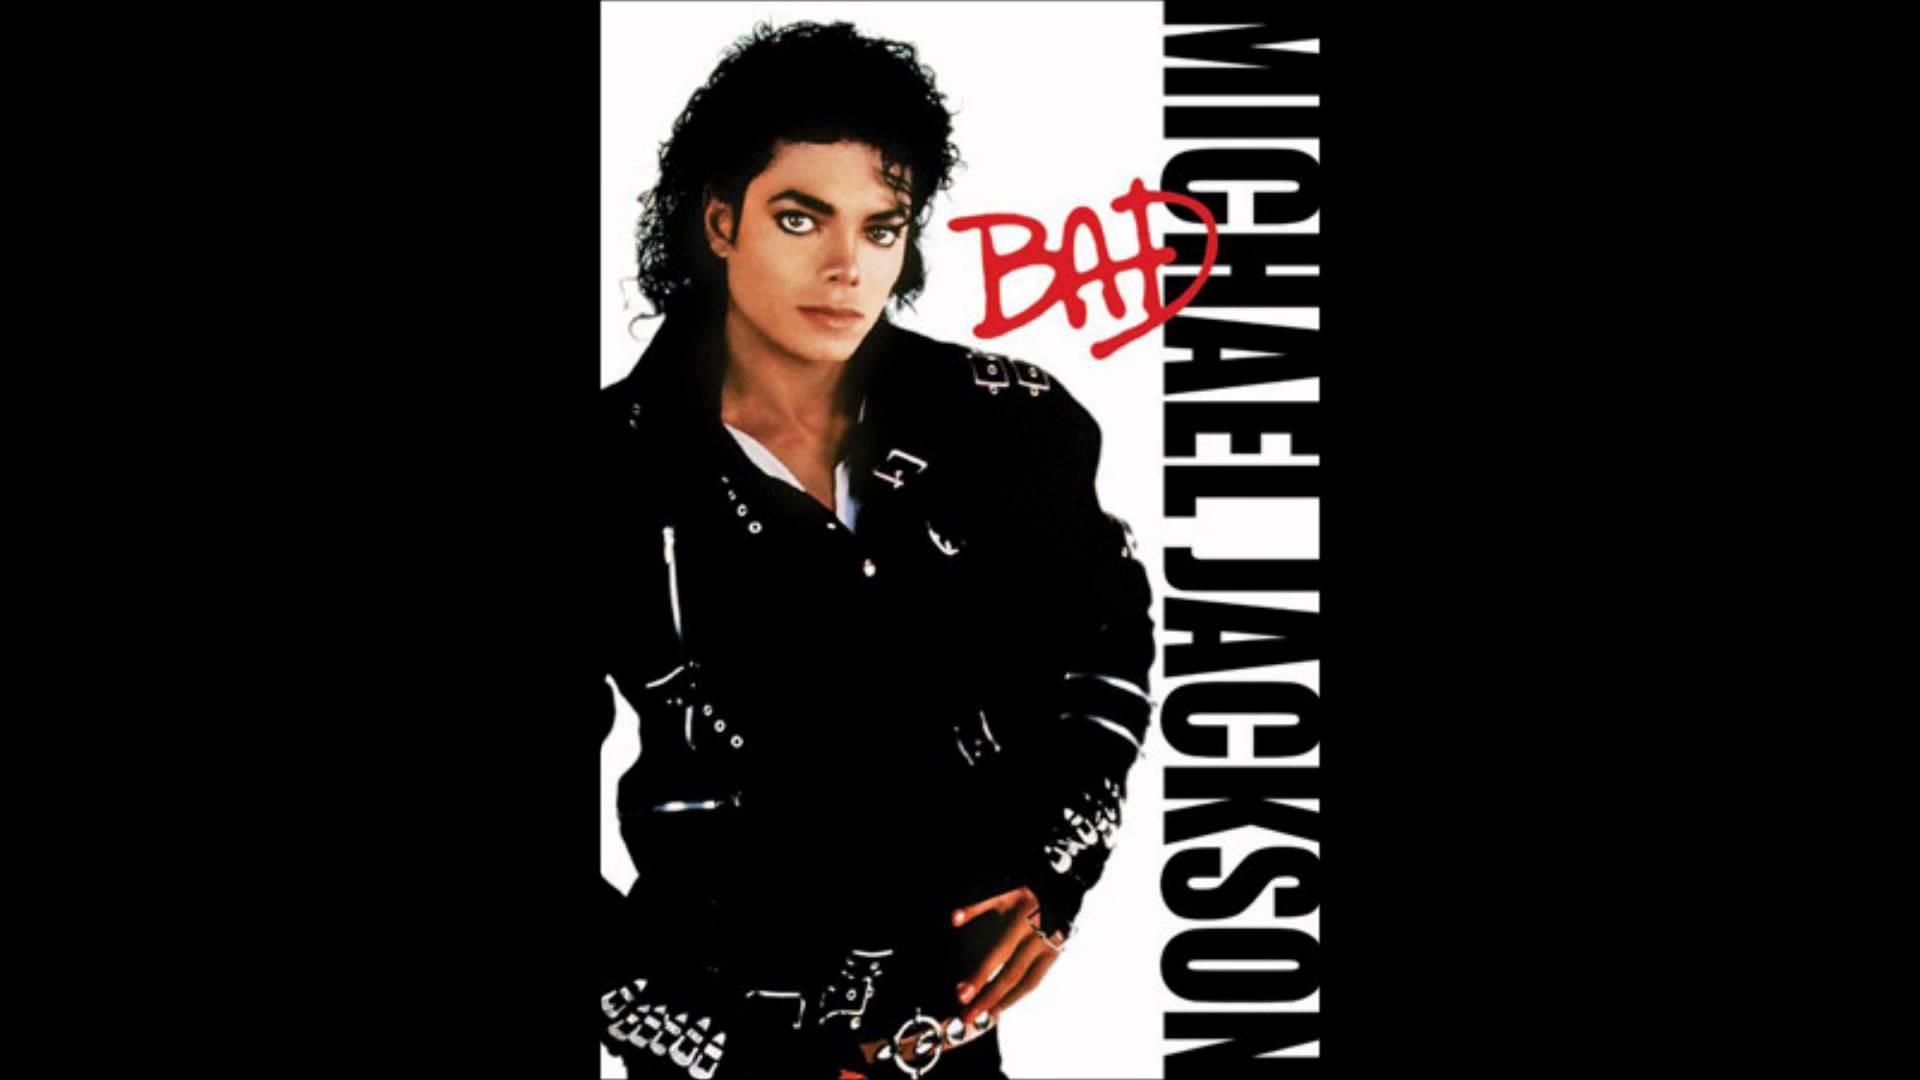 Michael jackson альбомы. Michael Jackson Bad 1987 LP.